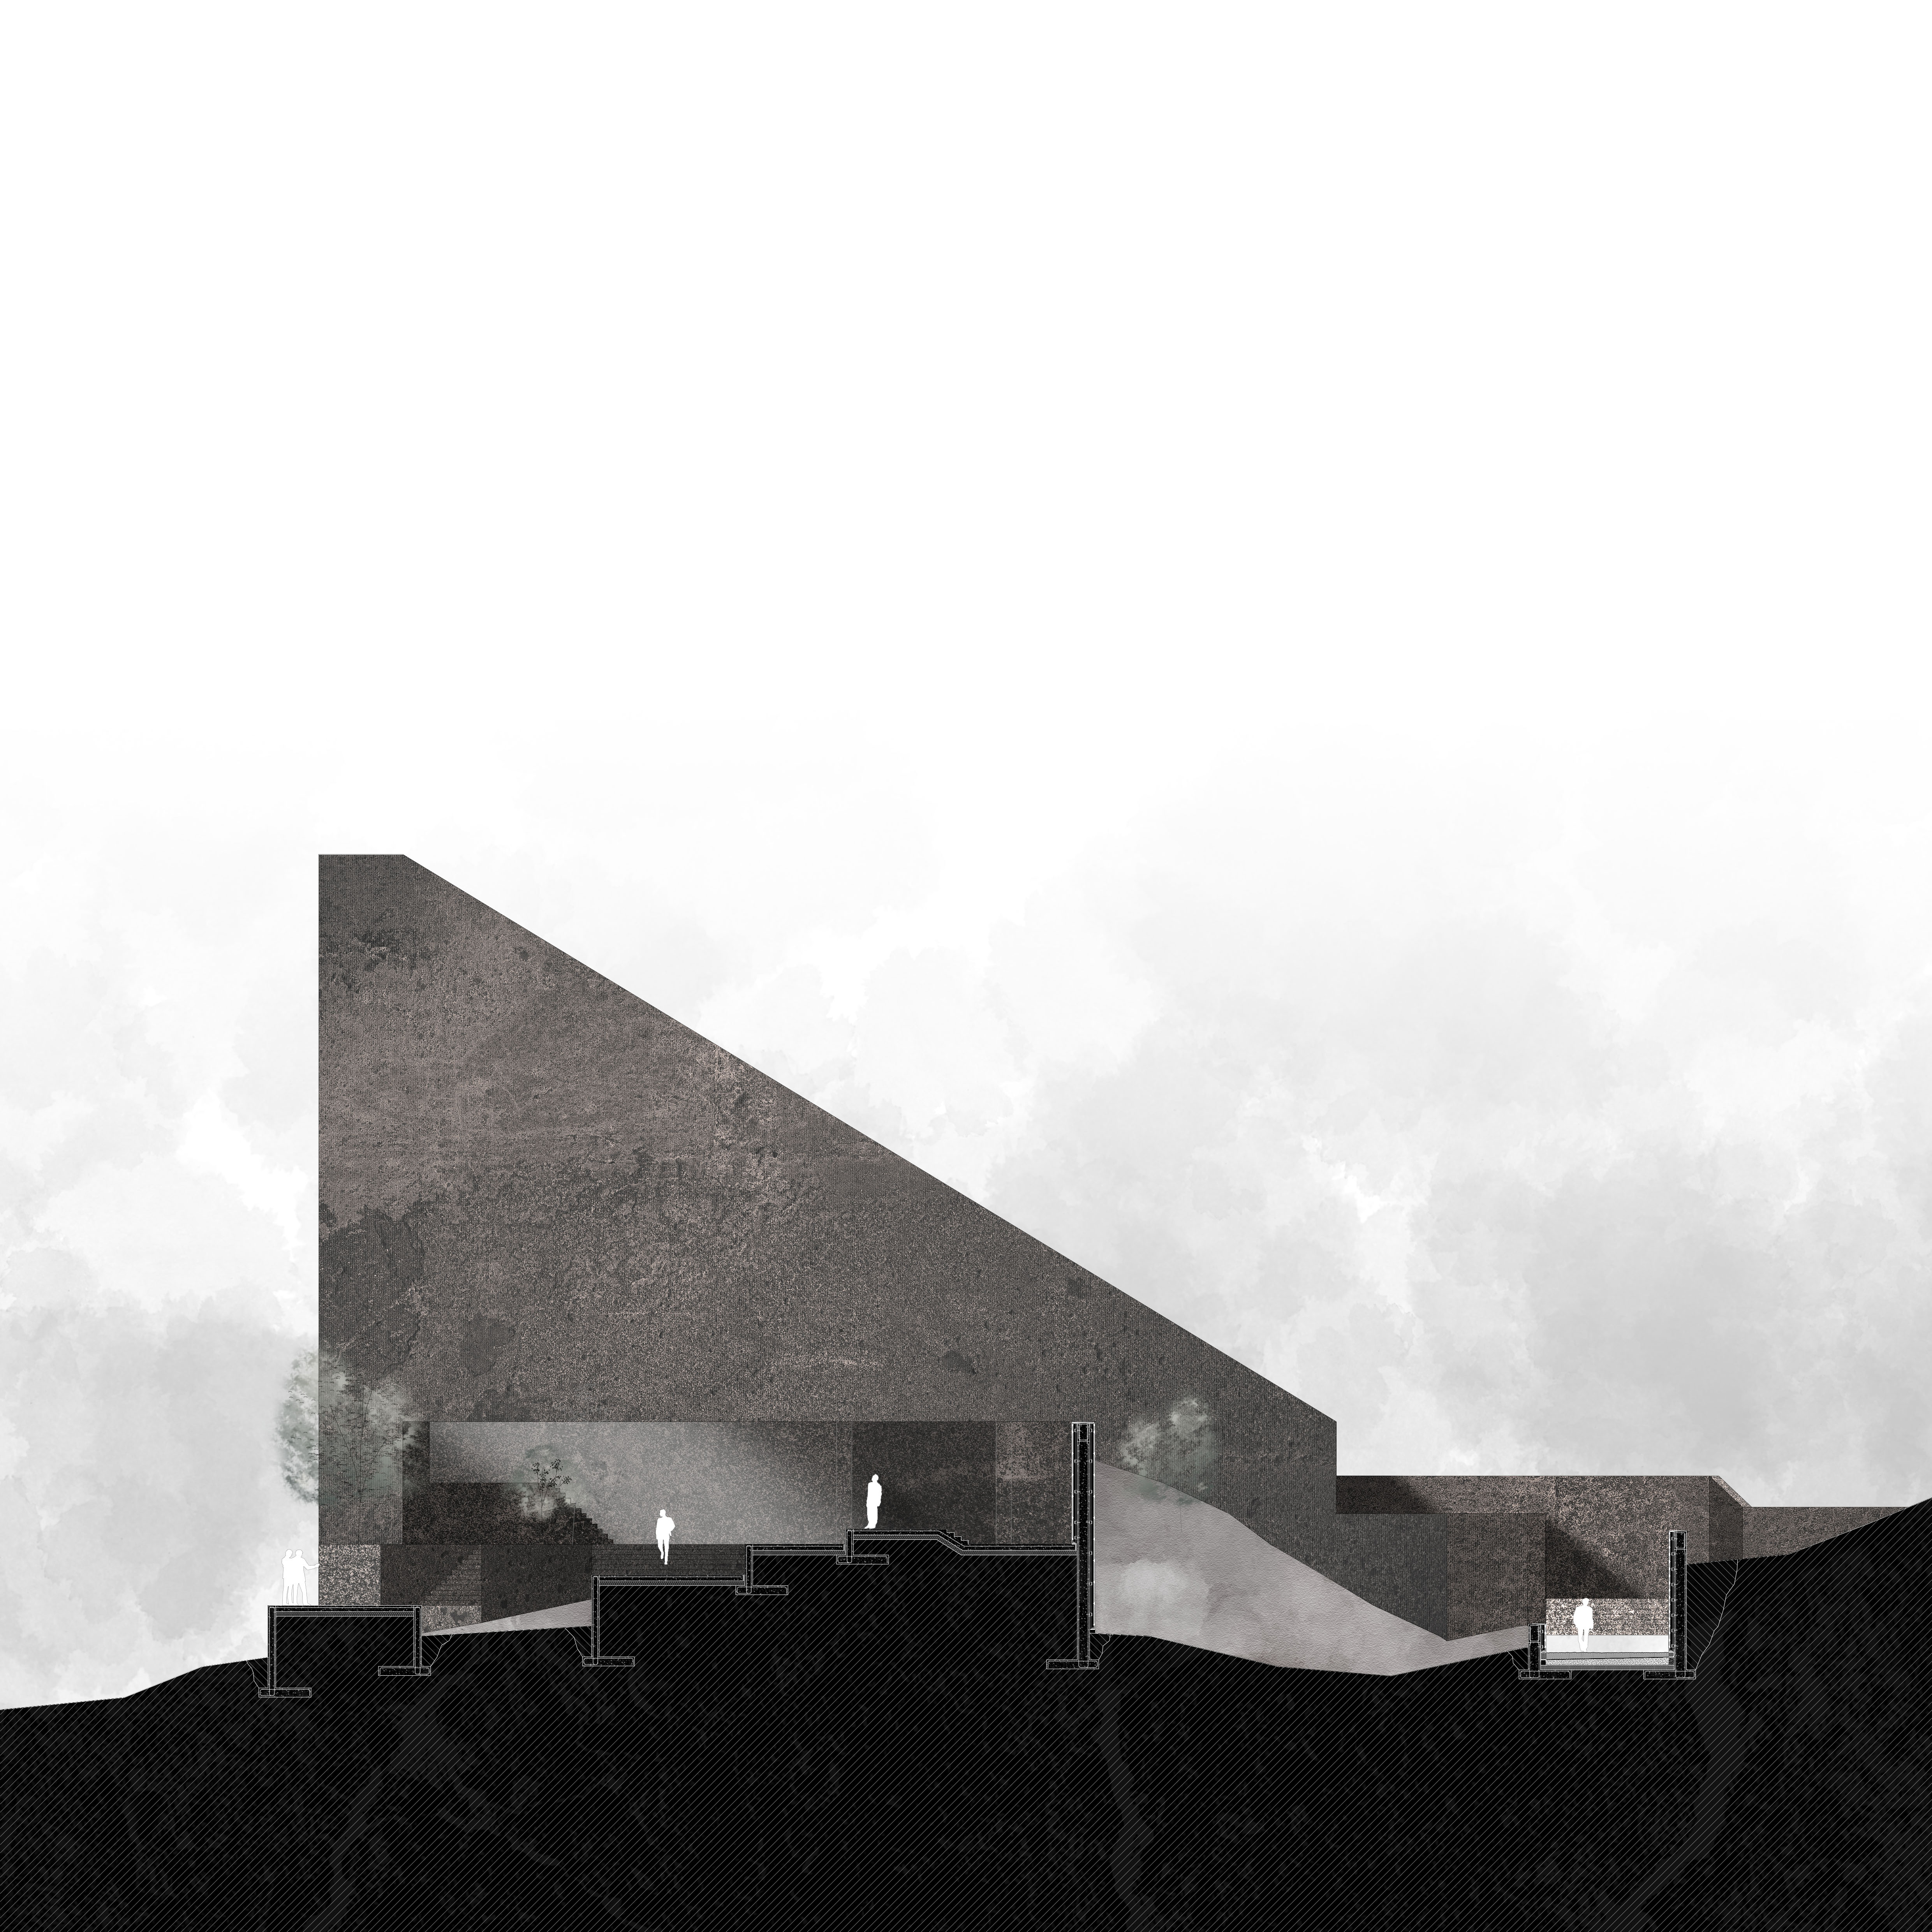 Project MT. ULÍA LANDSCAPE CATALYST by Recon Architecture, architecture studio in Bilbao